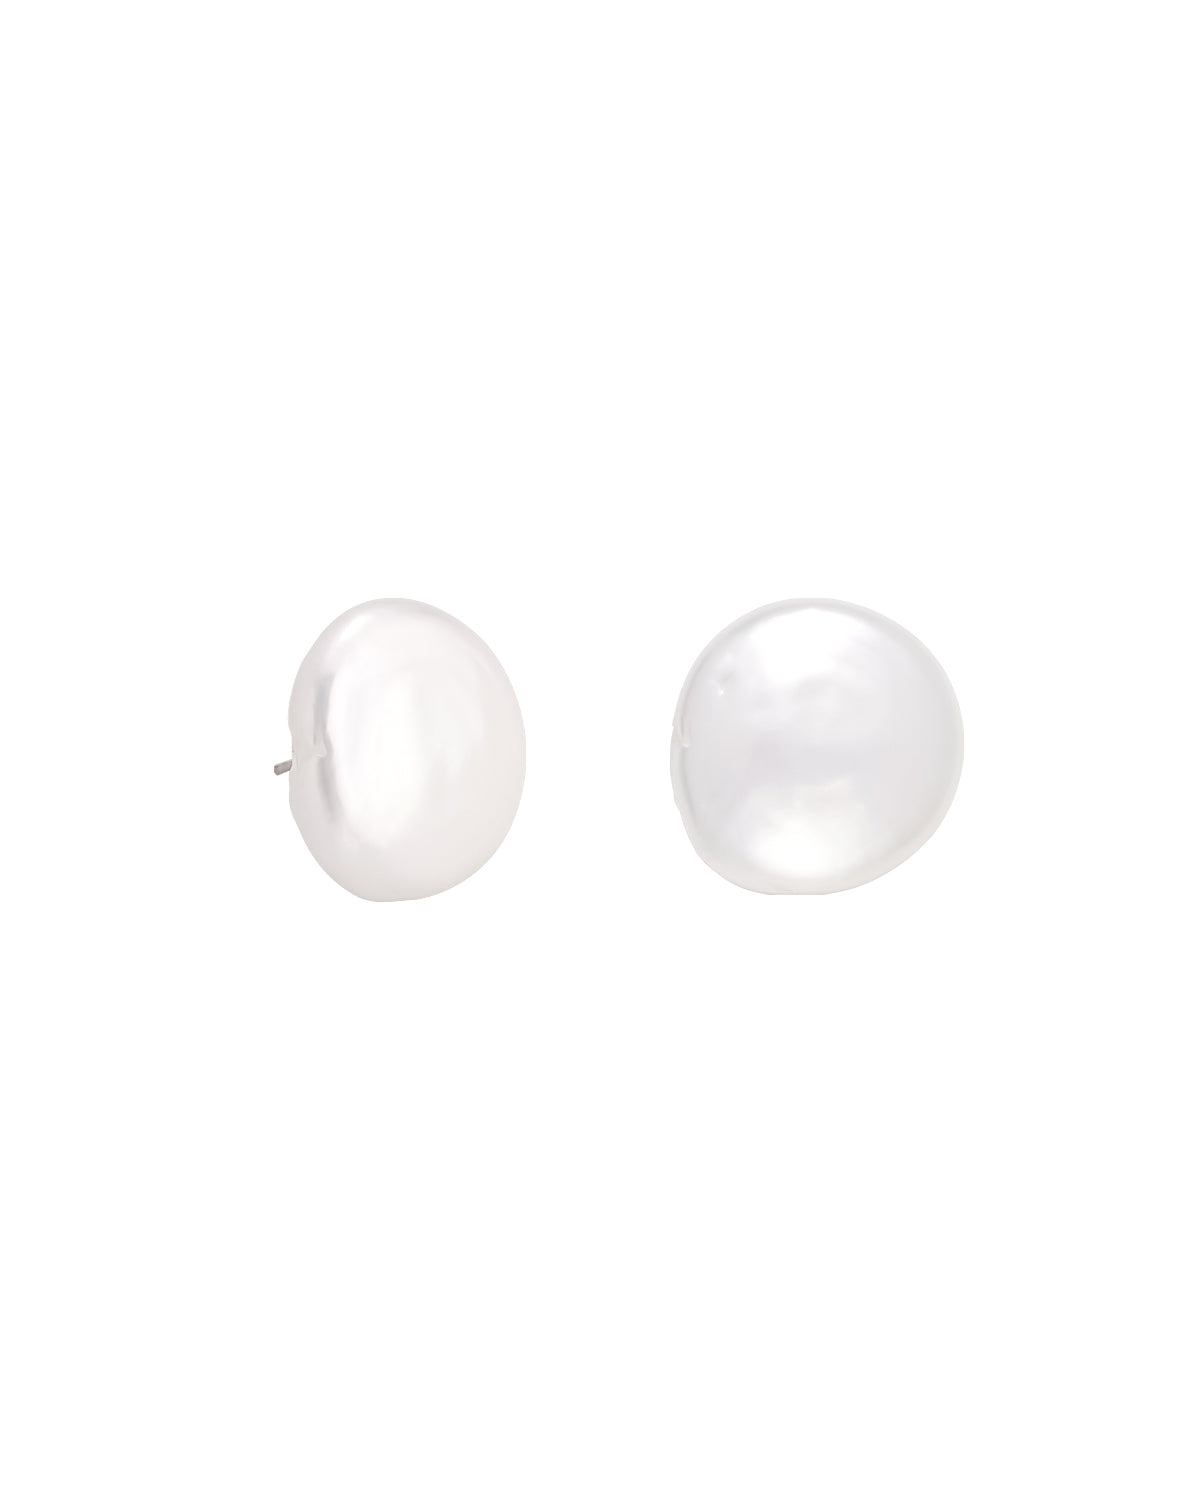 19-20mm Baroque Pearl Classic Drop Stud Earrings